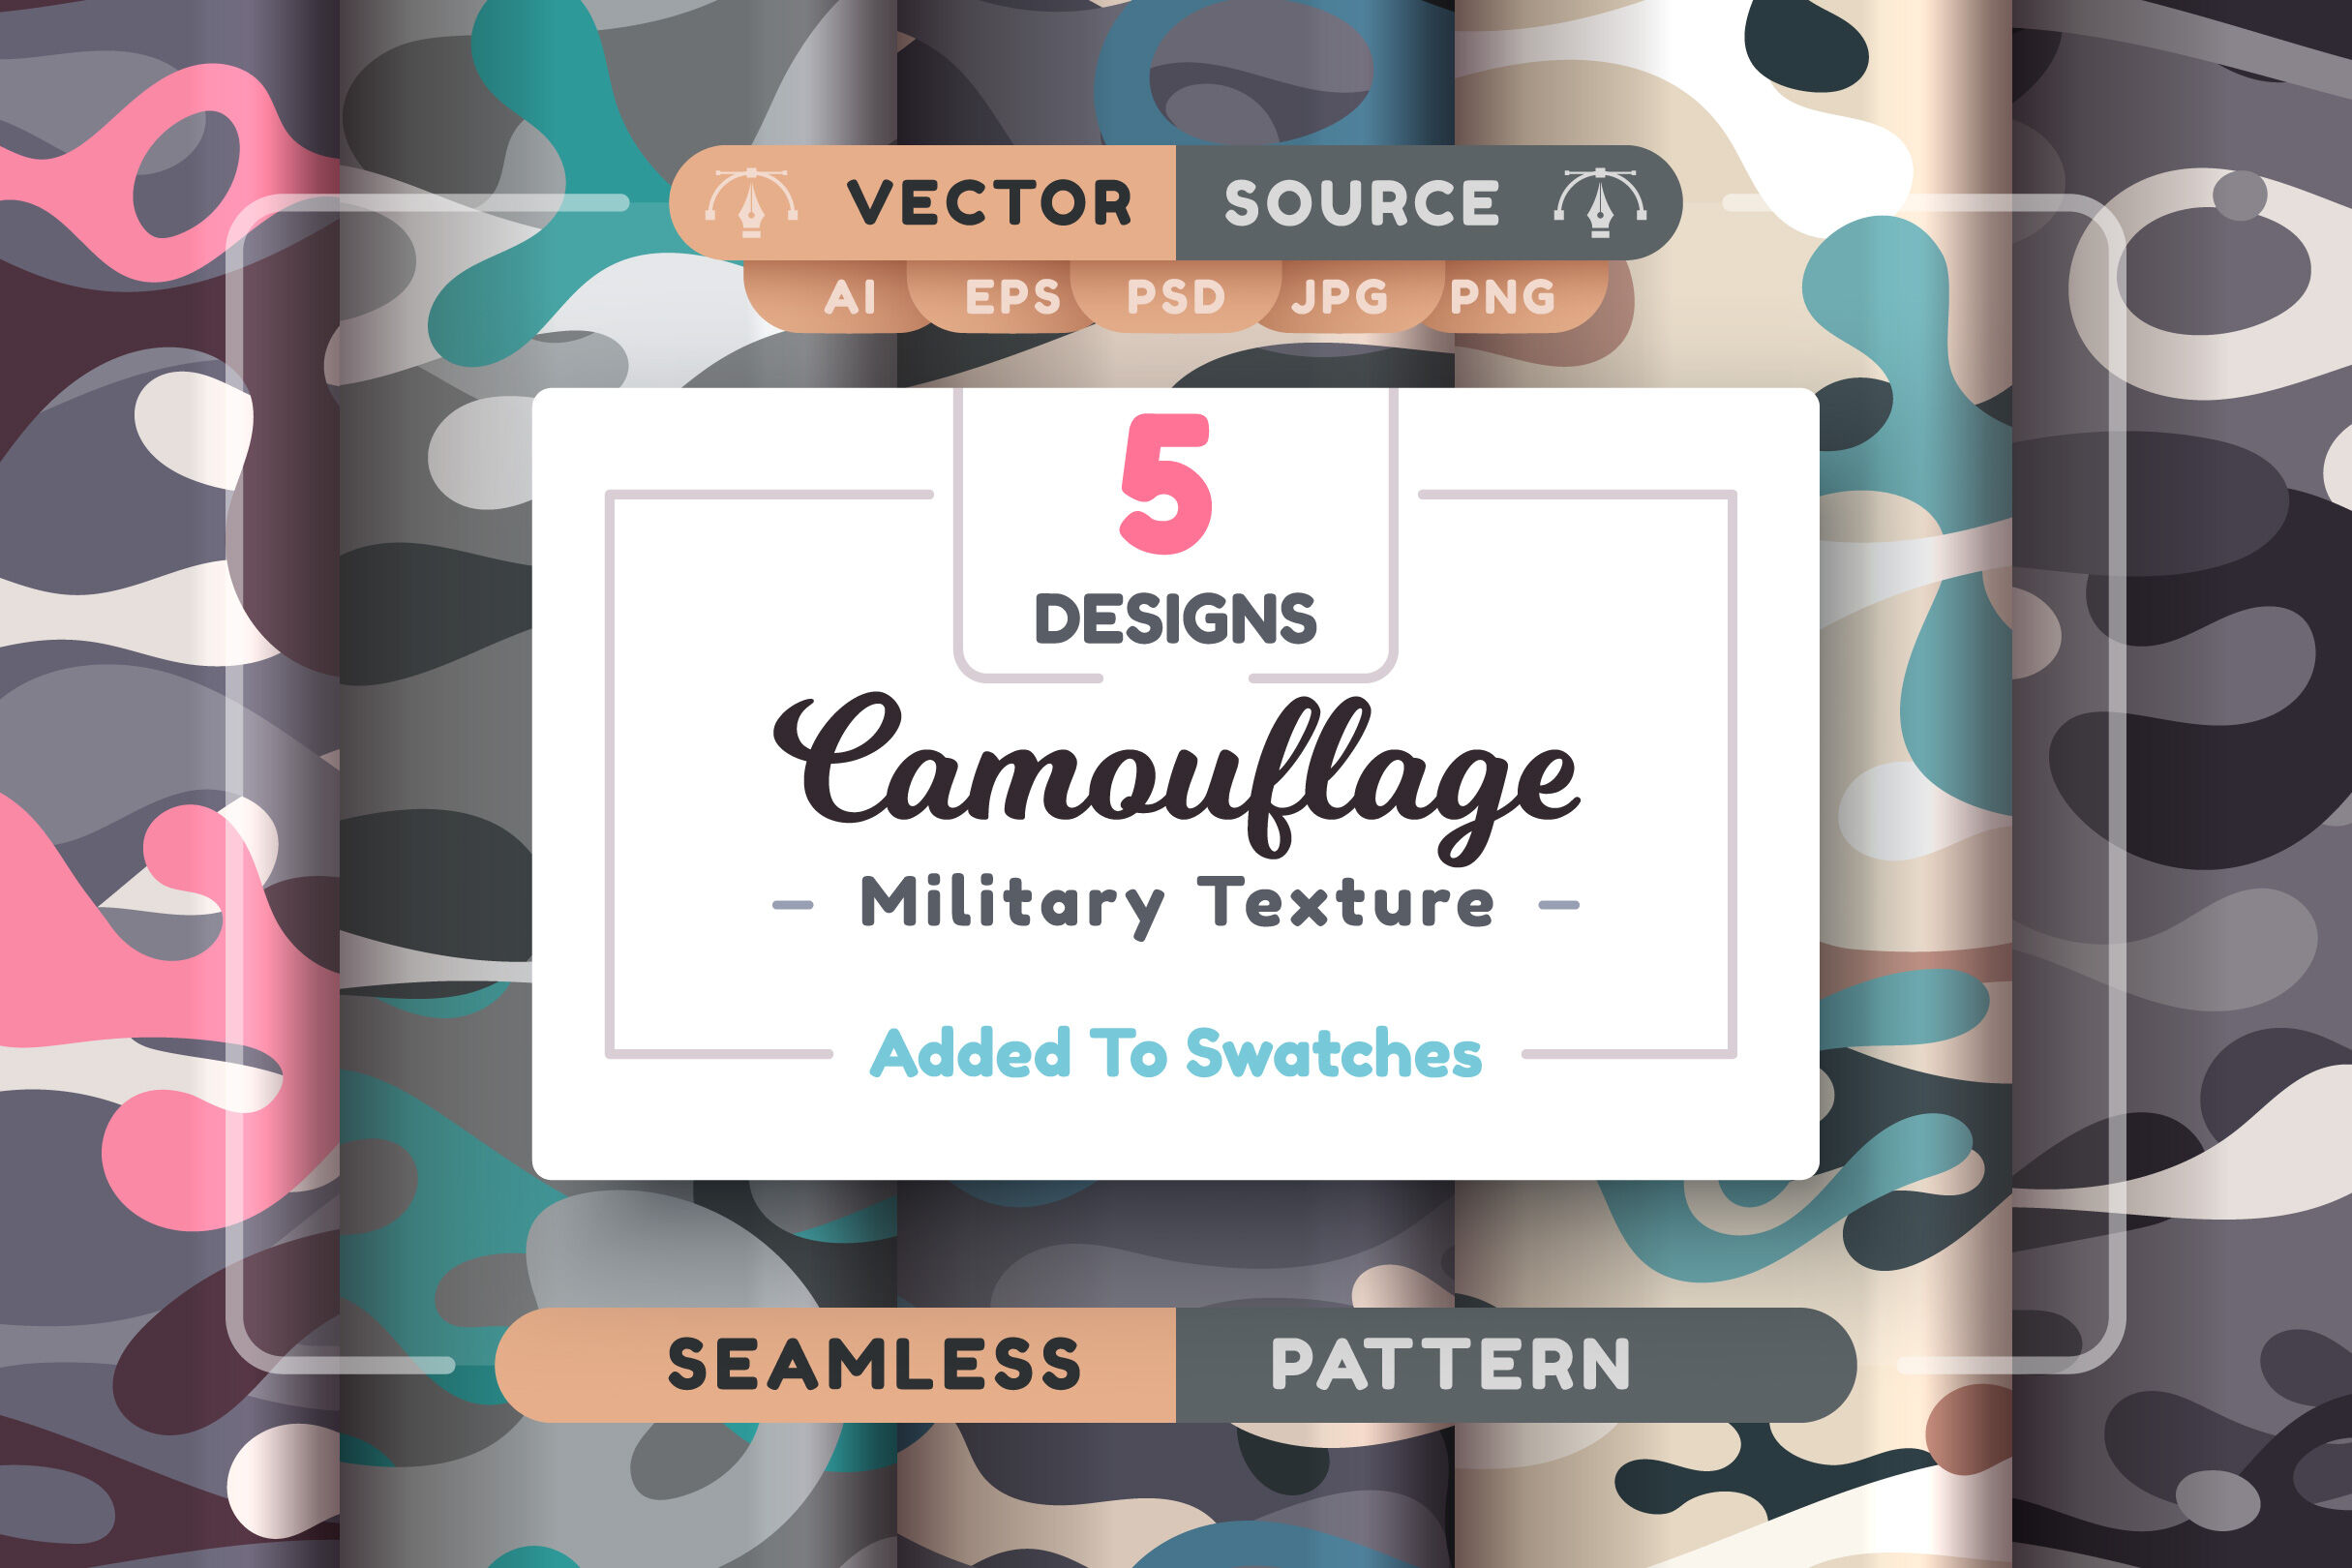 5 Seamless Camouflage Patterns